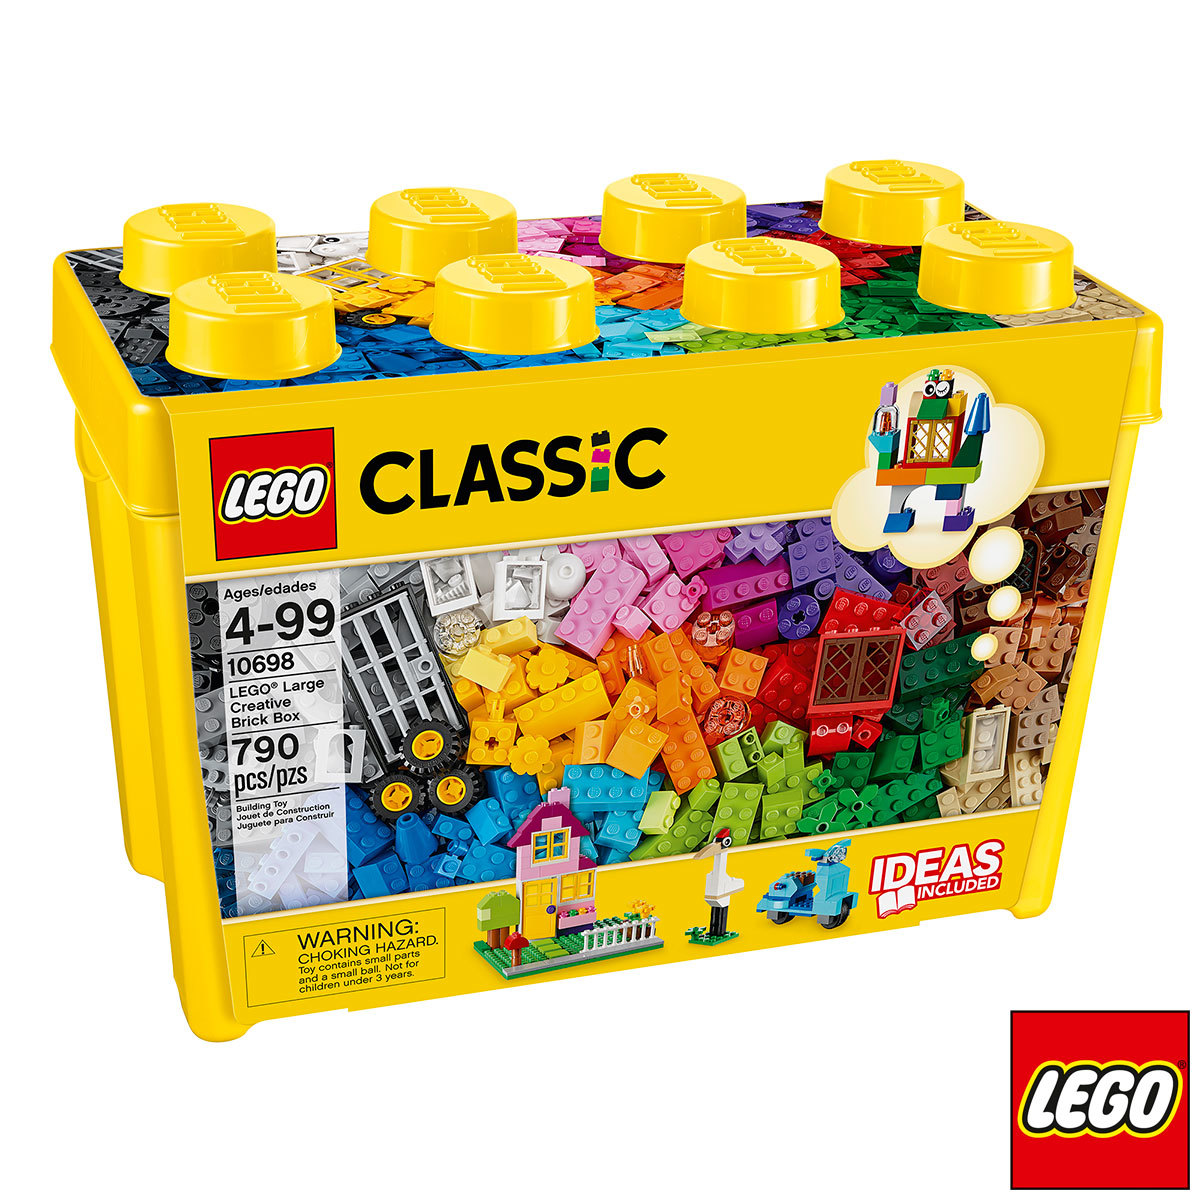 LEGO Classic box creative brick box set on white background